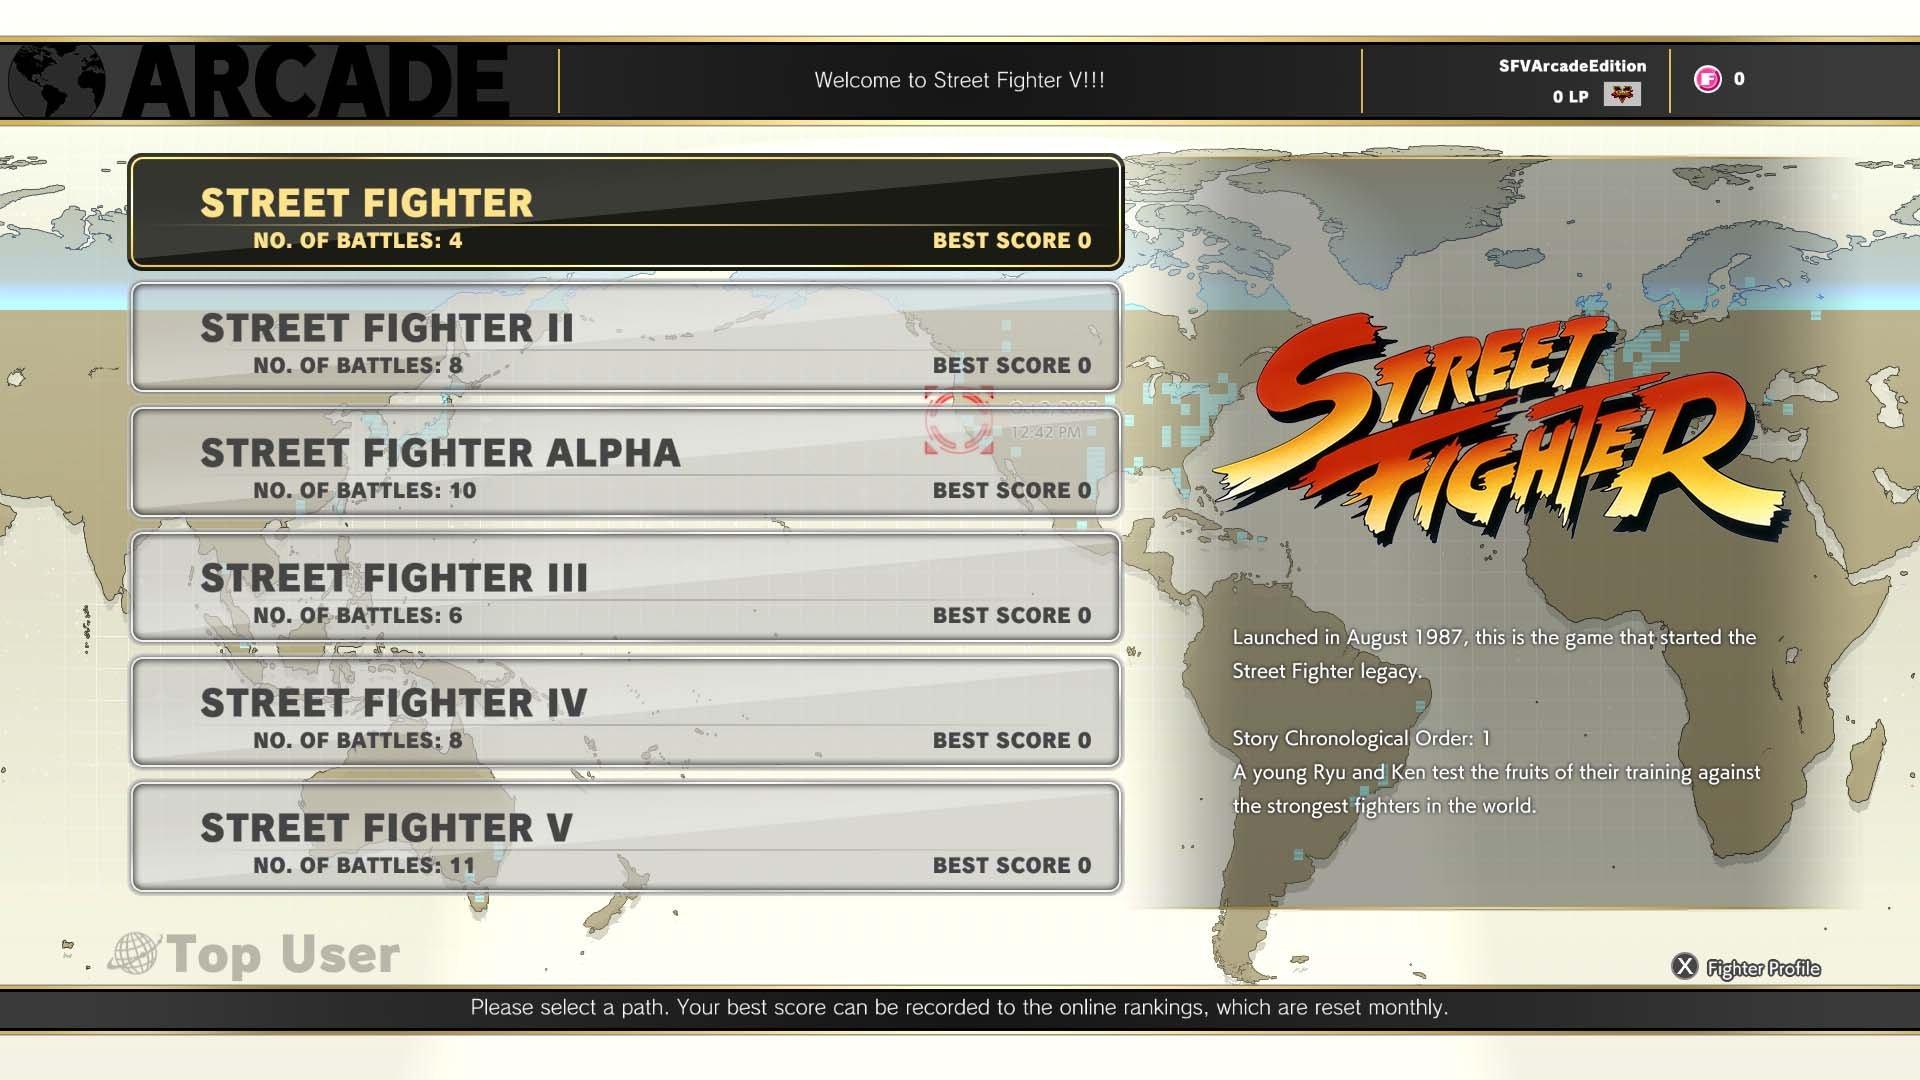 Street Fighter V — Season 5 Premium Pass on PS4 PS5 — price history,  screenshots, discounts • USA